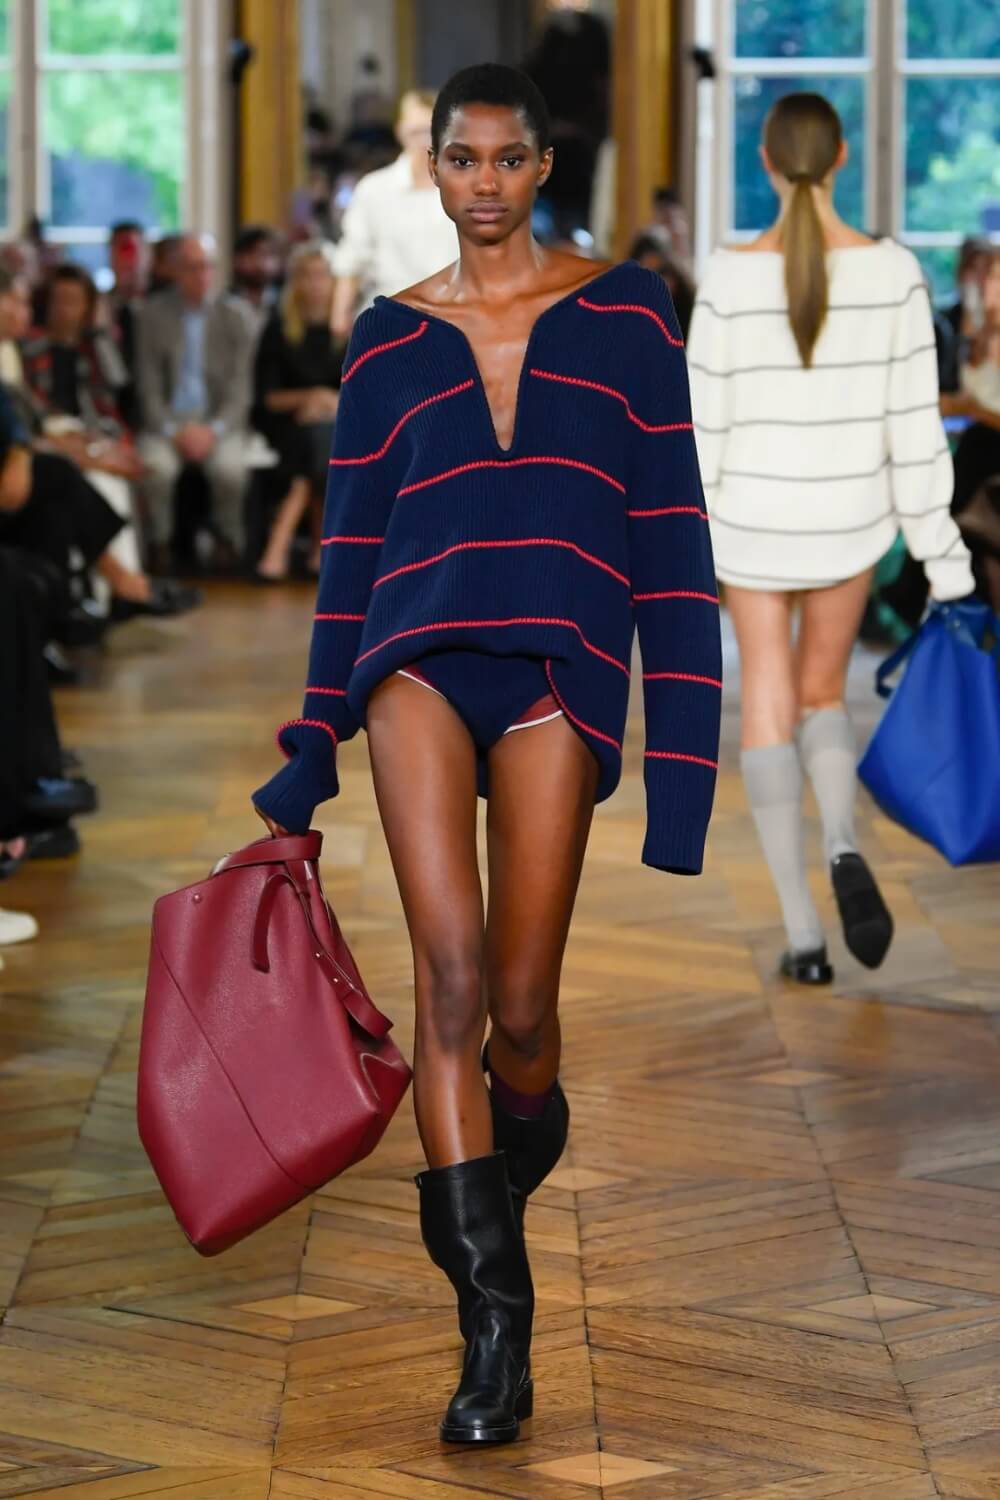 Paris Polka Dot & Striped Cosmetic Bag